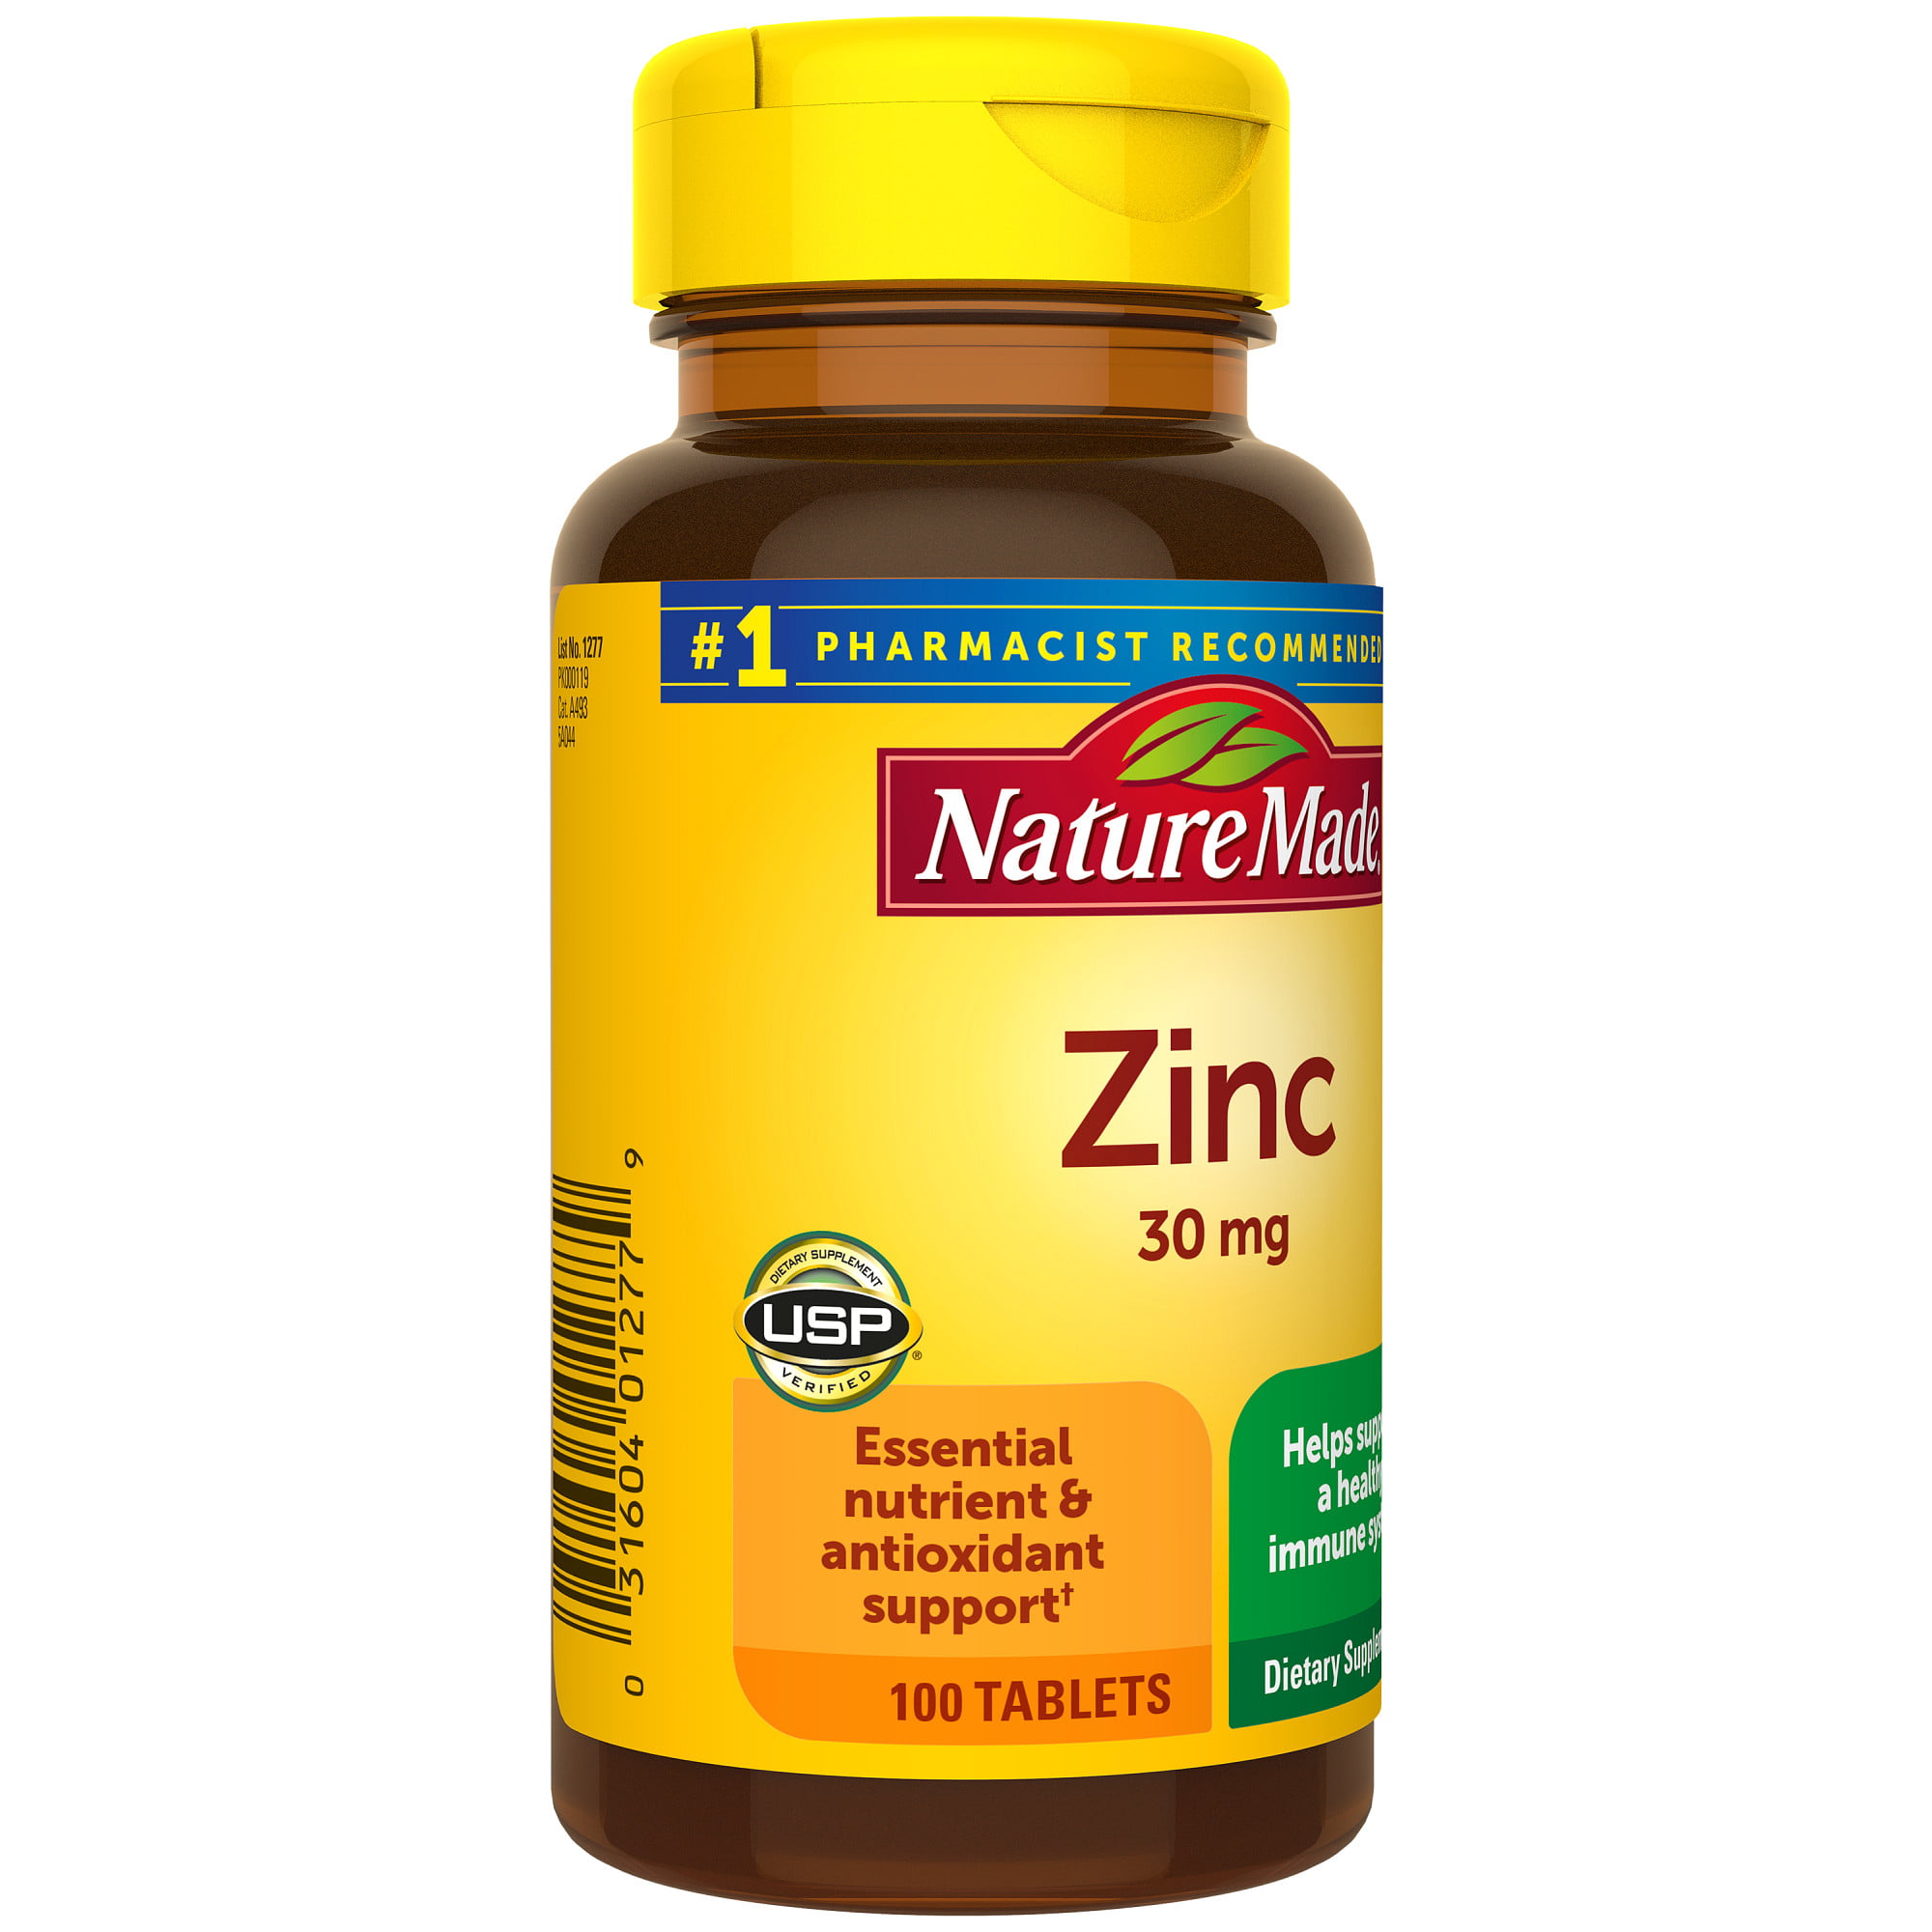 Nature Made Zinc 30 mg, Immune Health